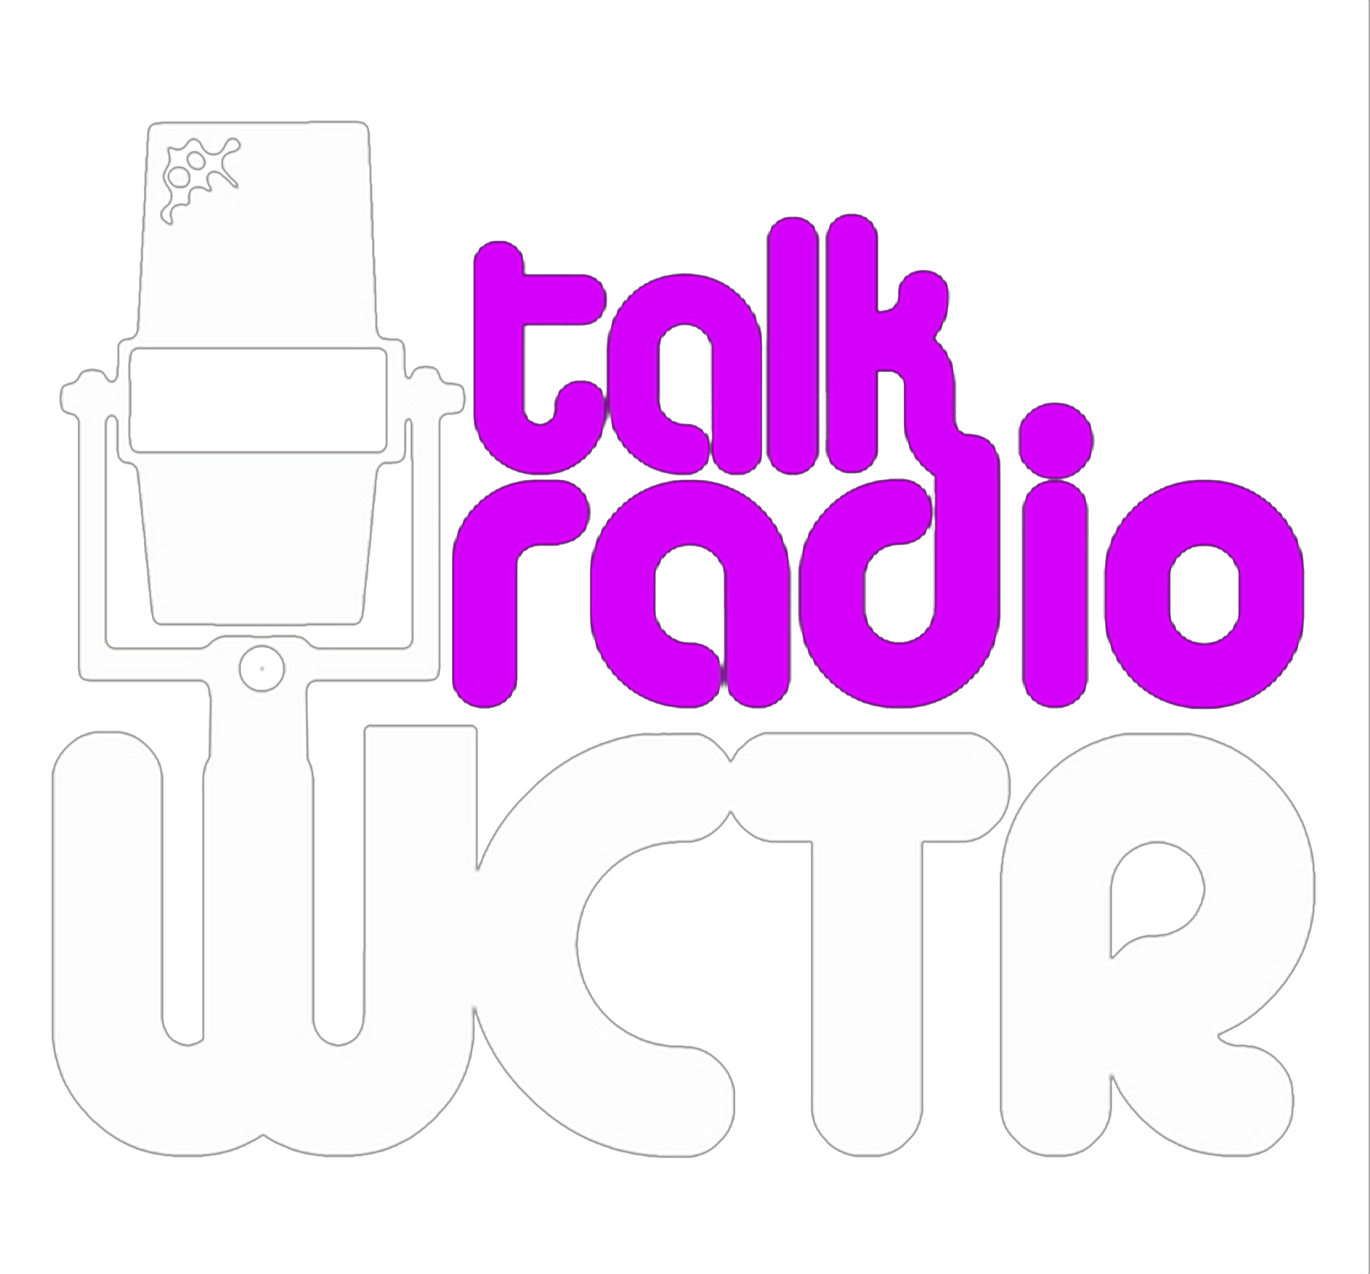 West Coast Talk Radio Gta Wiki Fandom